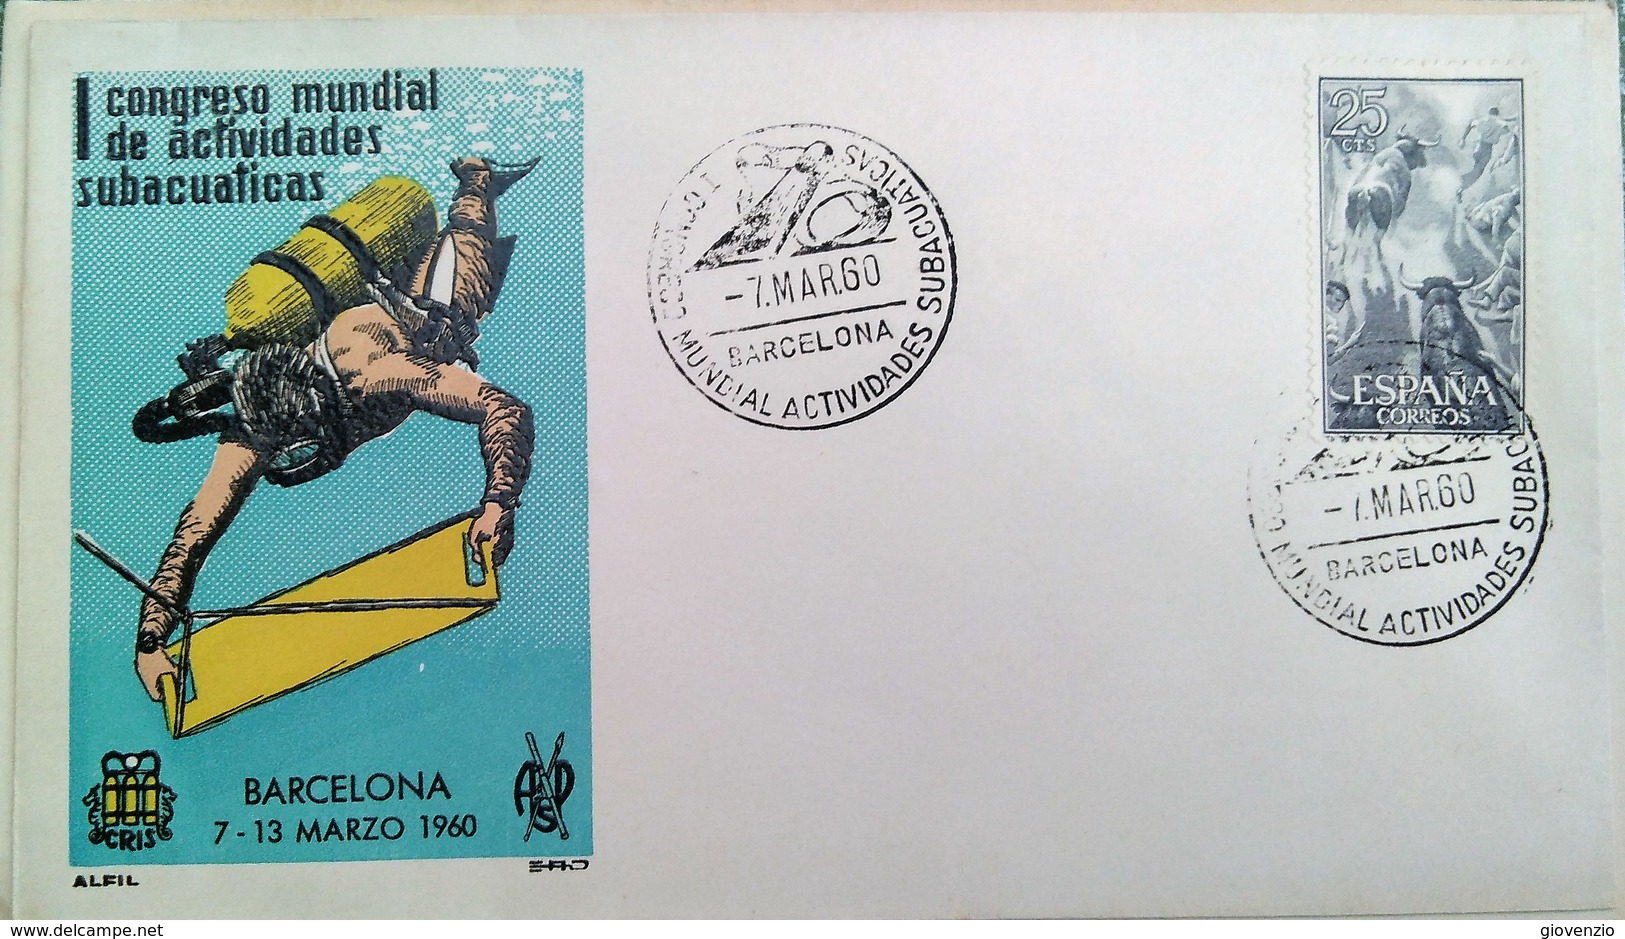 SPAIN 1960 SPORT CONGRESO MUNDIAL DE ACTIVITA SUBACQUEA CANCEL AND COVER - Storia Postale